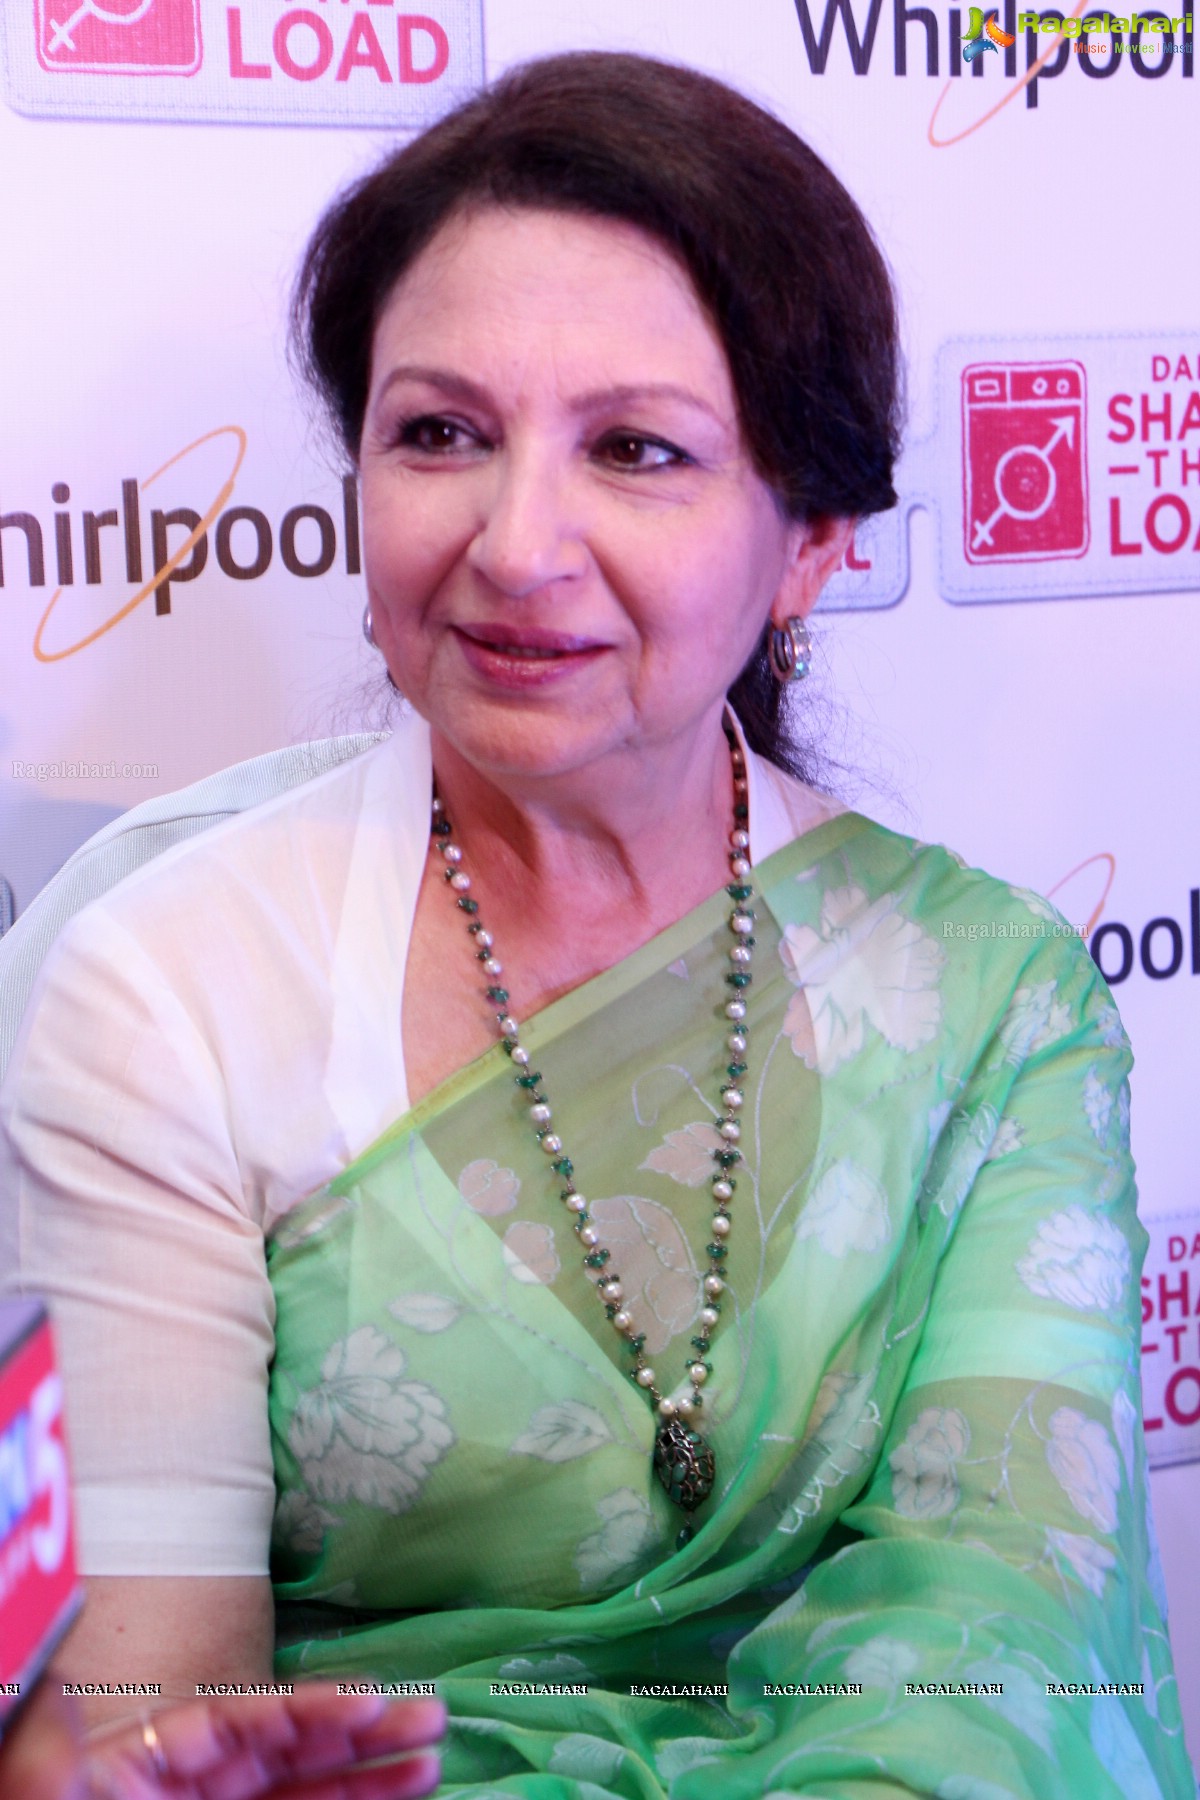 Sharmila Tagore and Soha Ali Khan at Ariel and Whirlpool Share The Load Press Meet